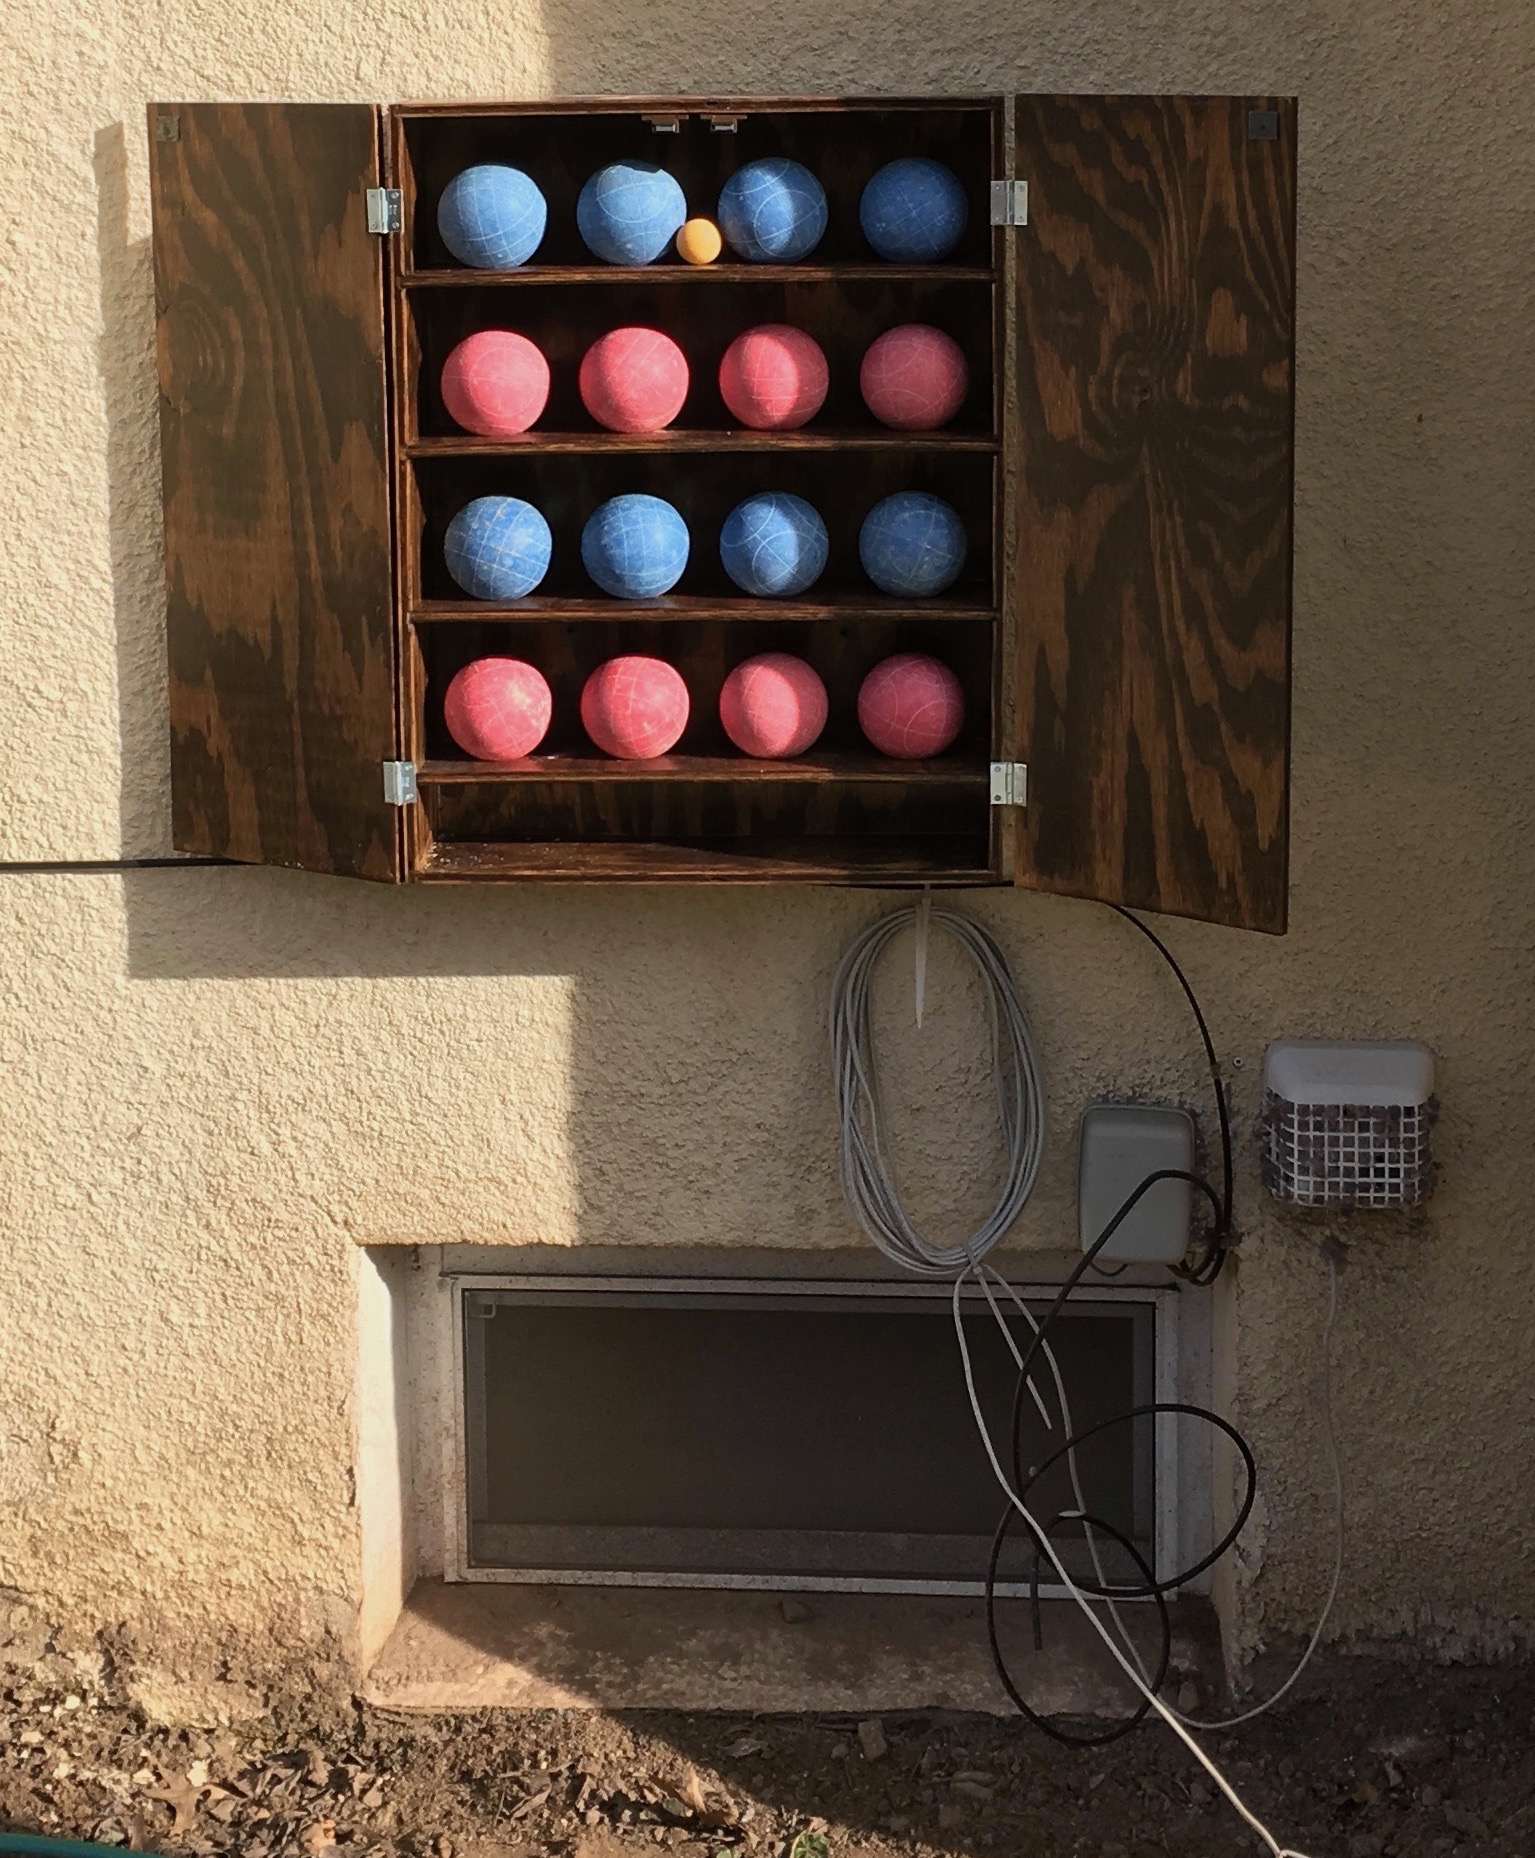 Ball cabinet